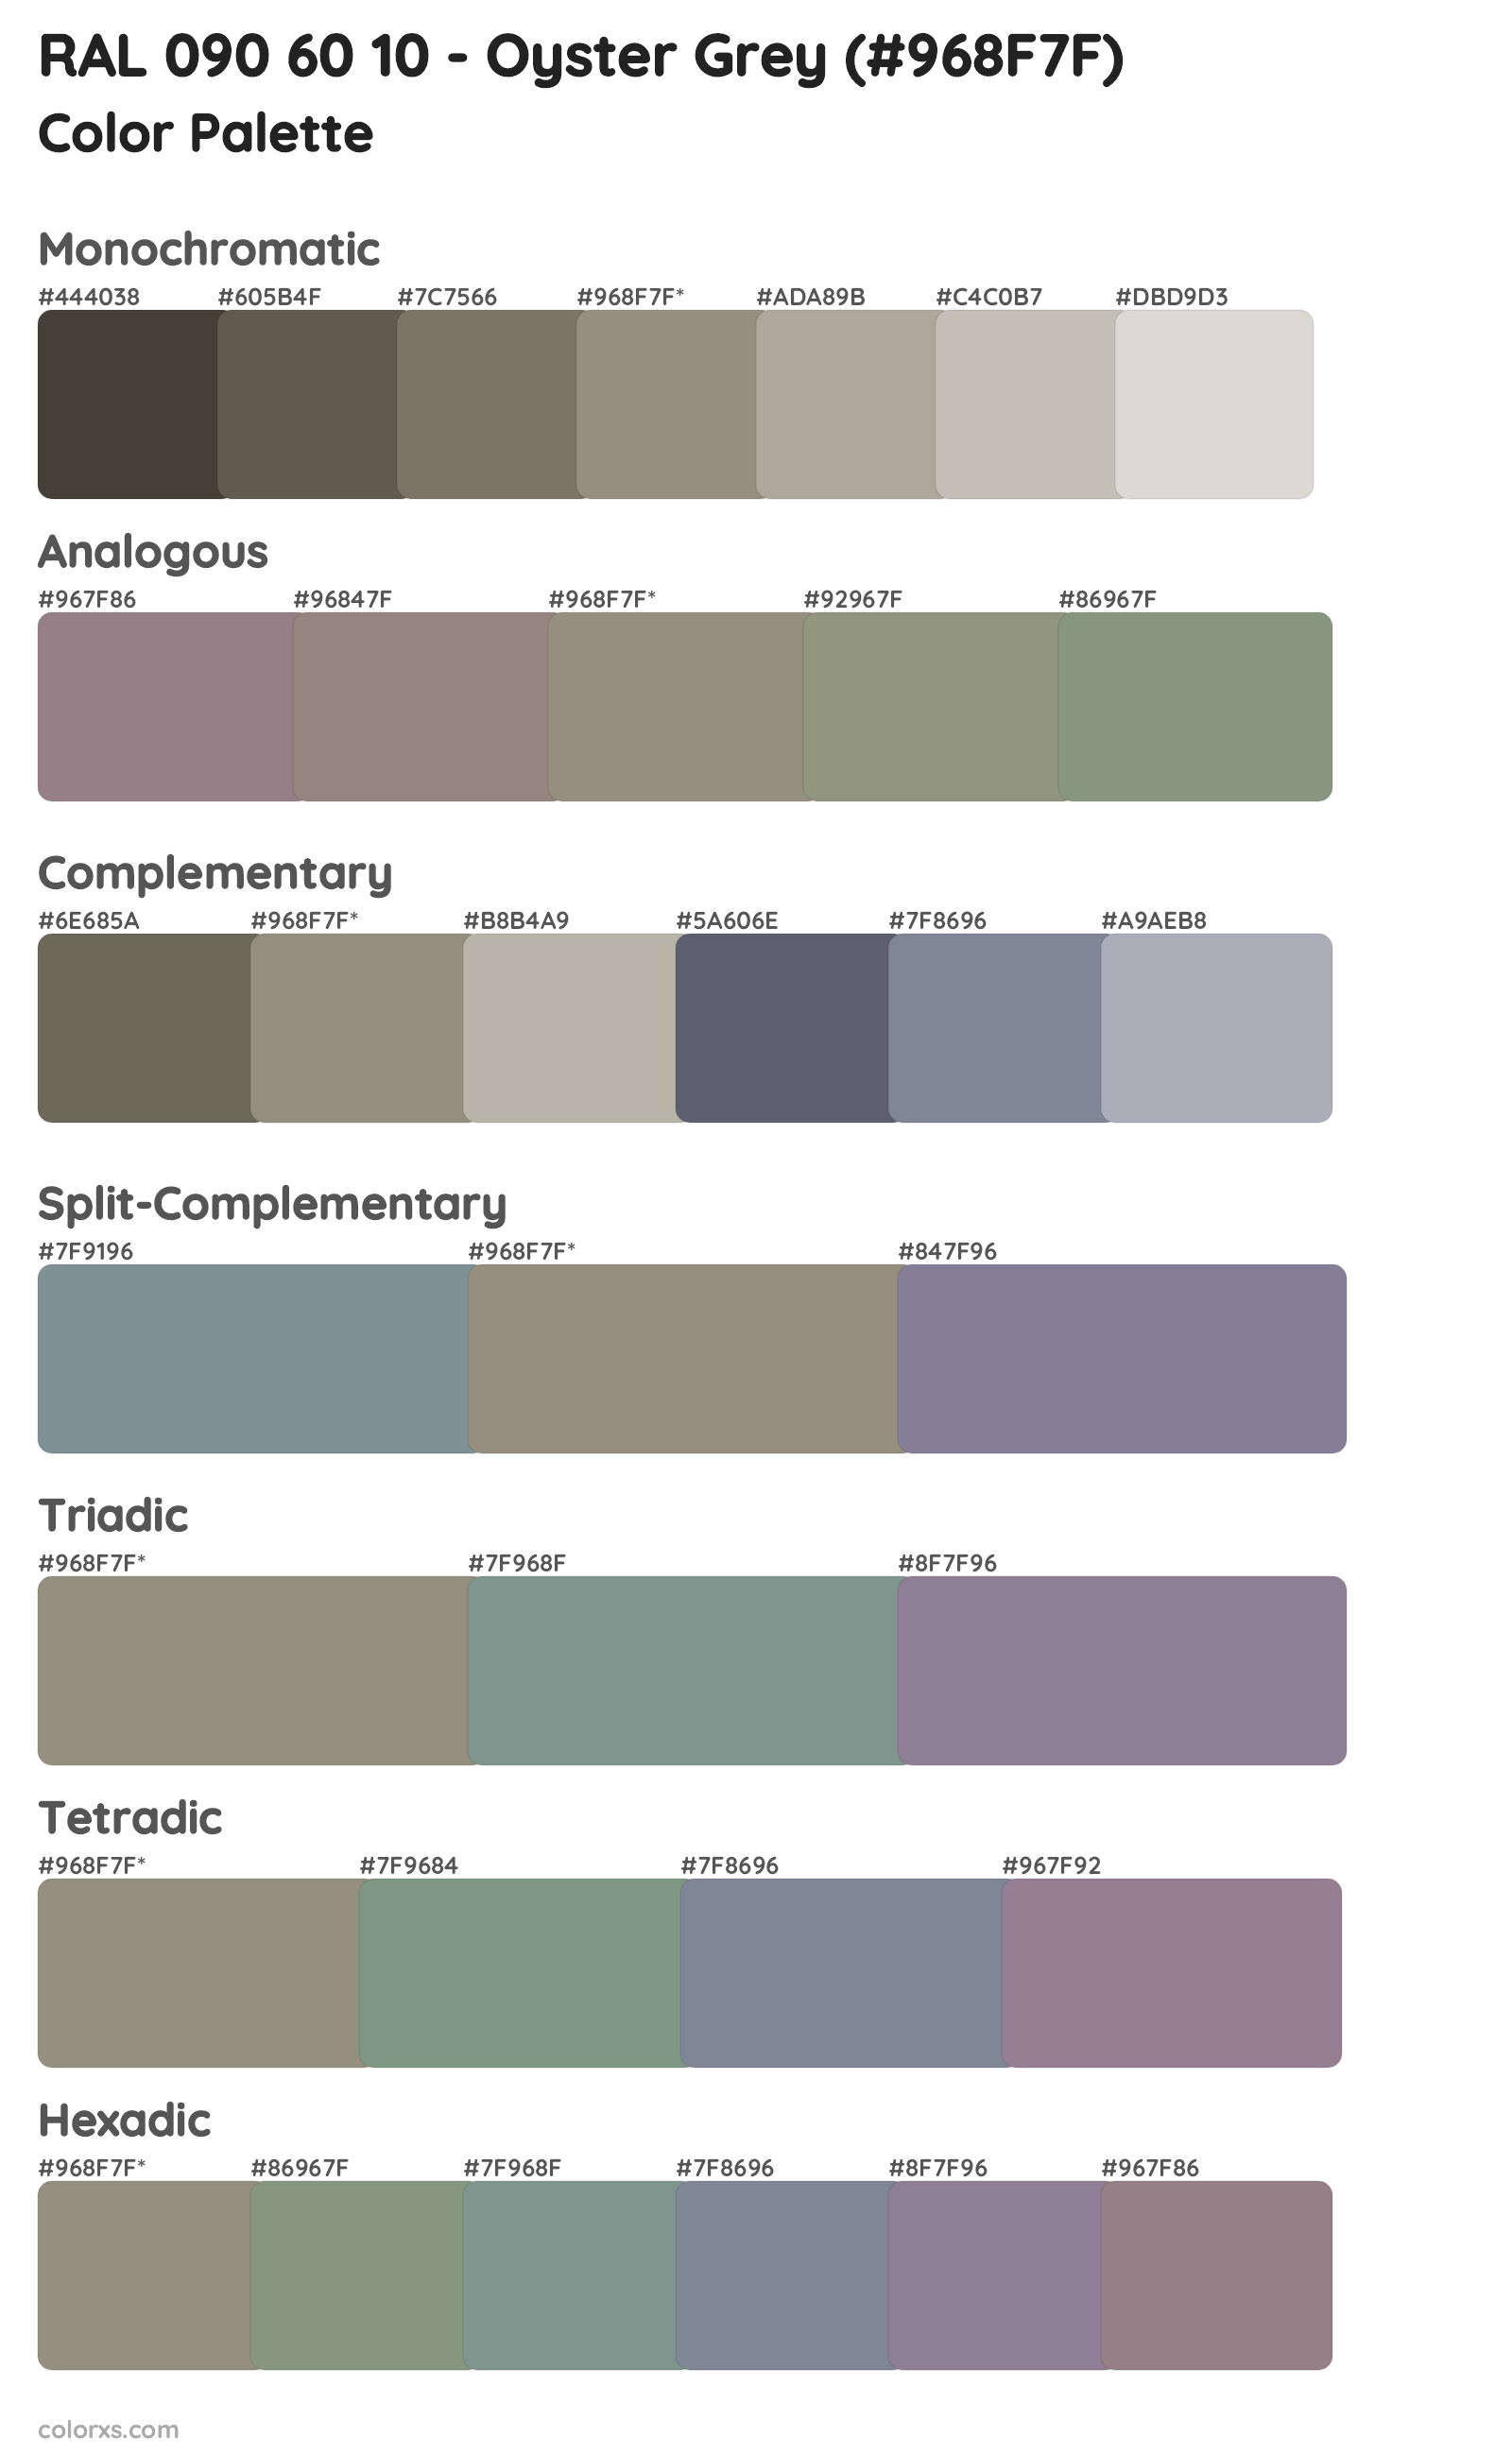 RAL 090 60 10 - Oyster Grey Color Scheme Palettes